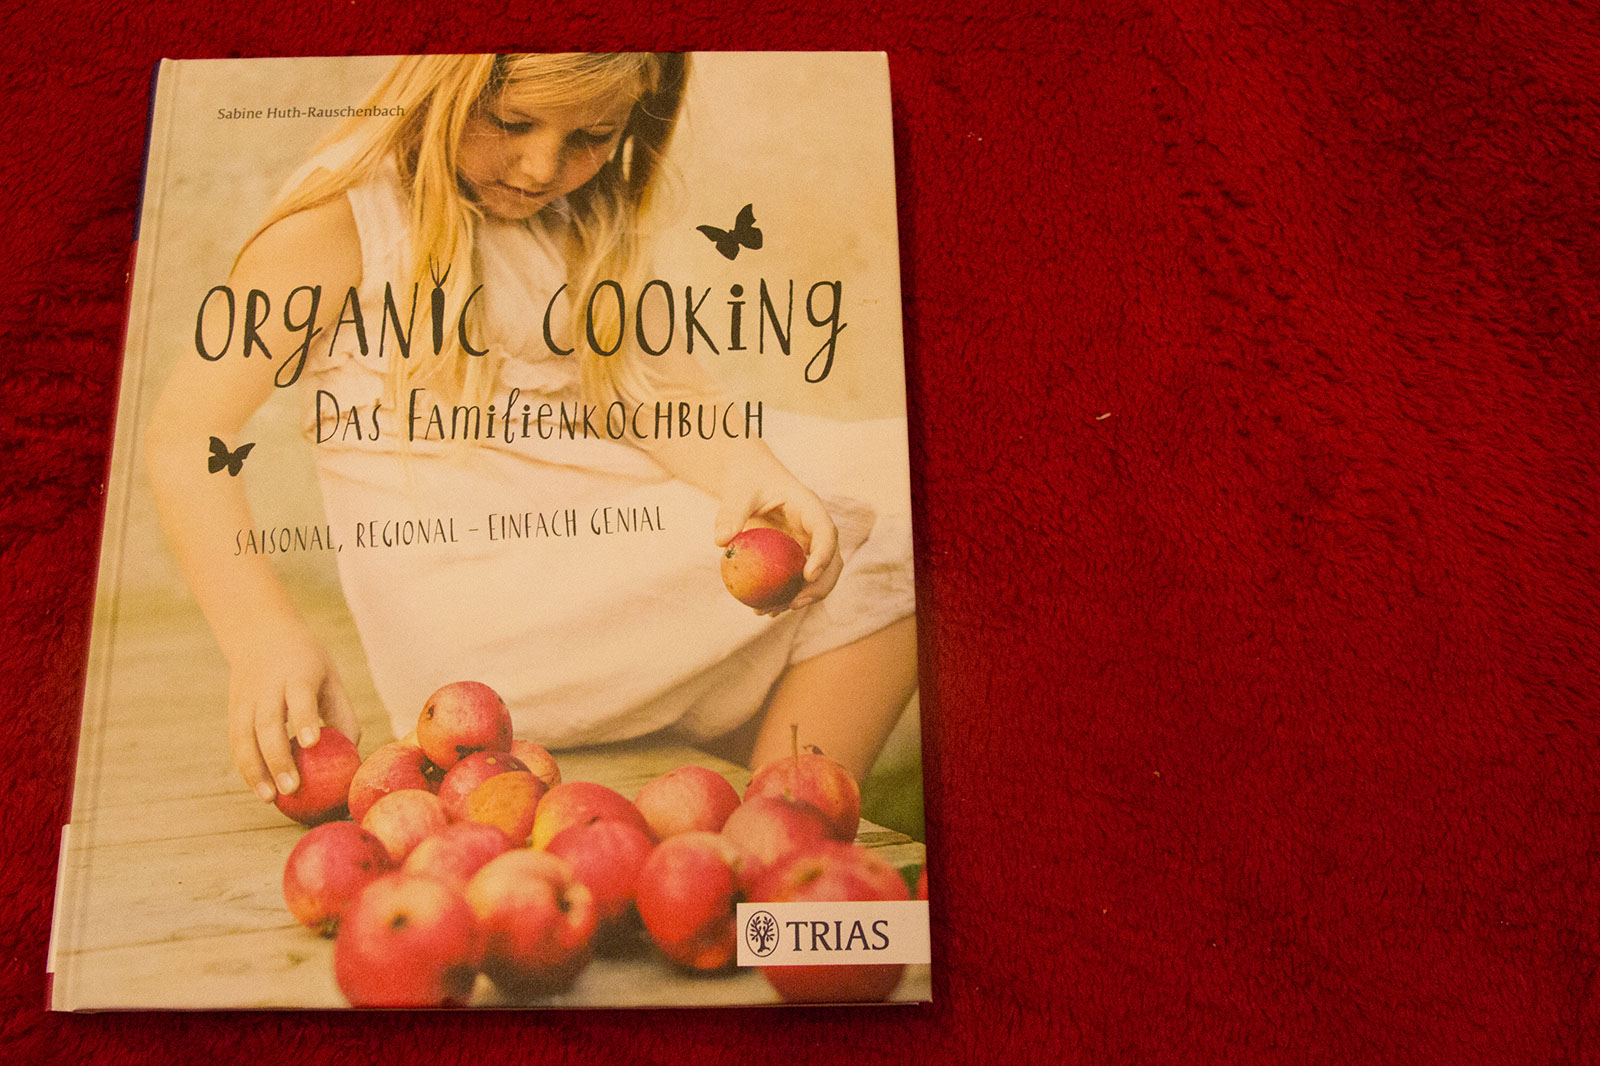 OrganicCooking - Das Familienkochbuch